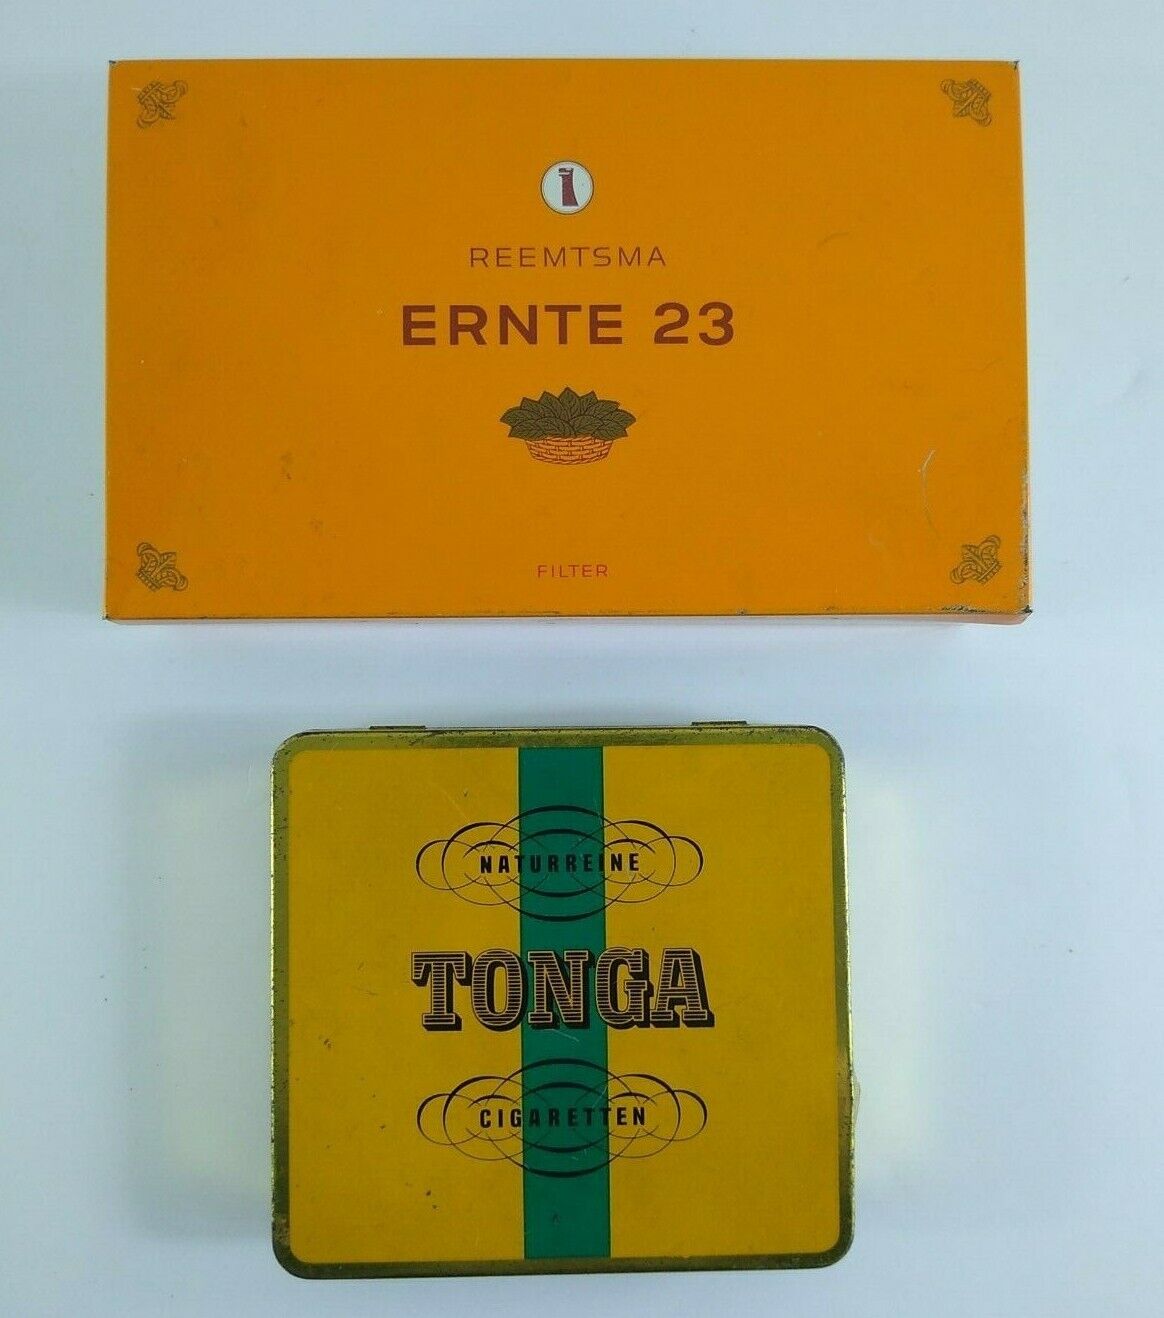 Vintage German Cigarette Tins Reemstsma Ernte 23 Tonga Naturreine Cigaretten